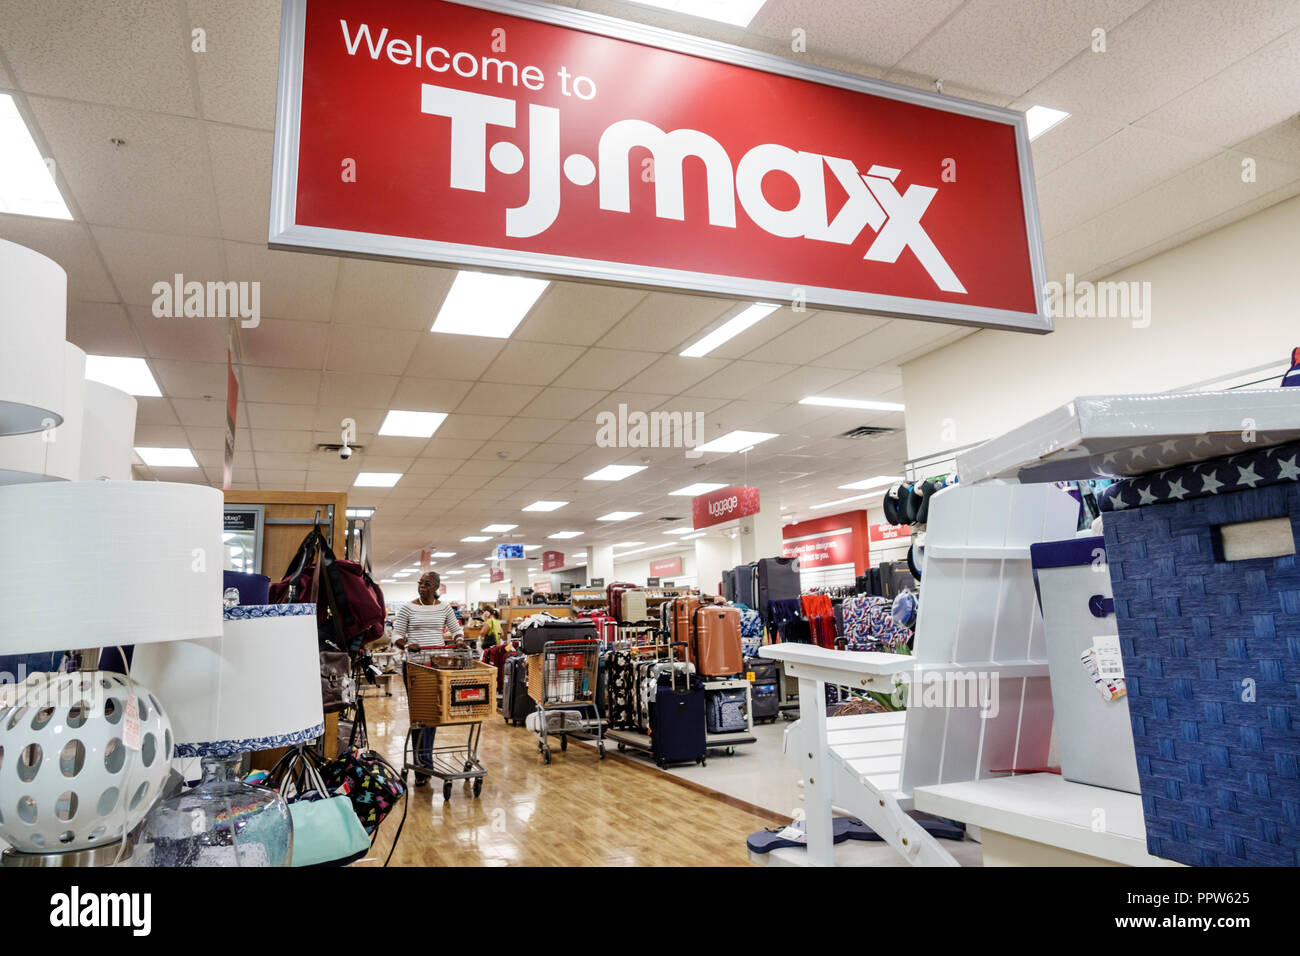 Florida, Miami, Kendall, T.J. TJ Maxx discount department store